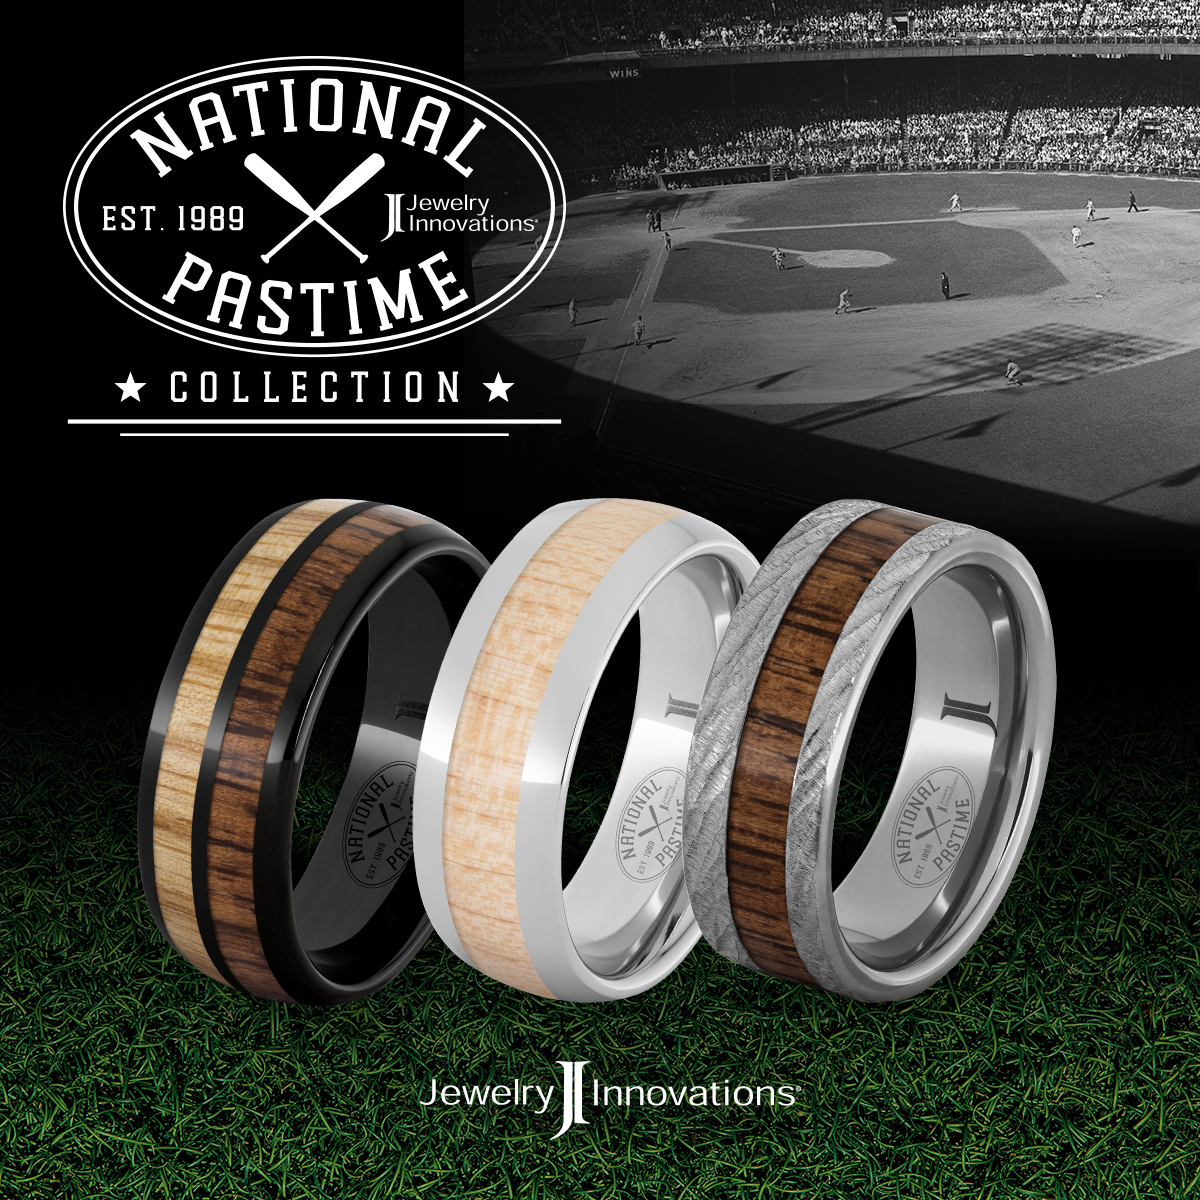 National Pastime Baseball Ring Collection